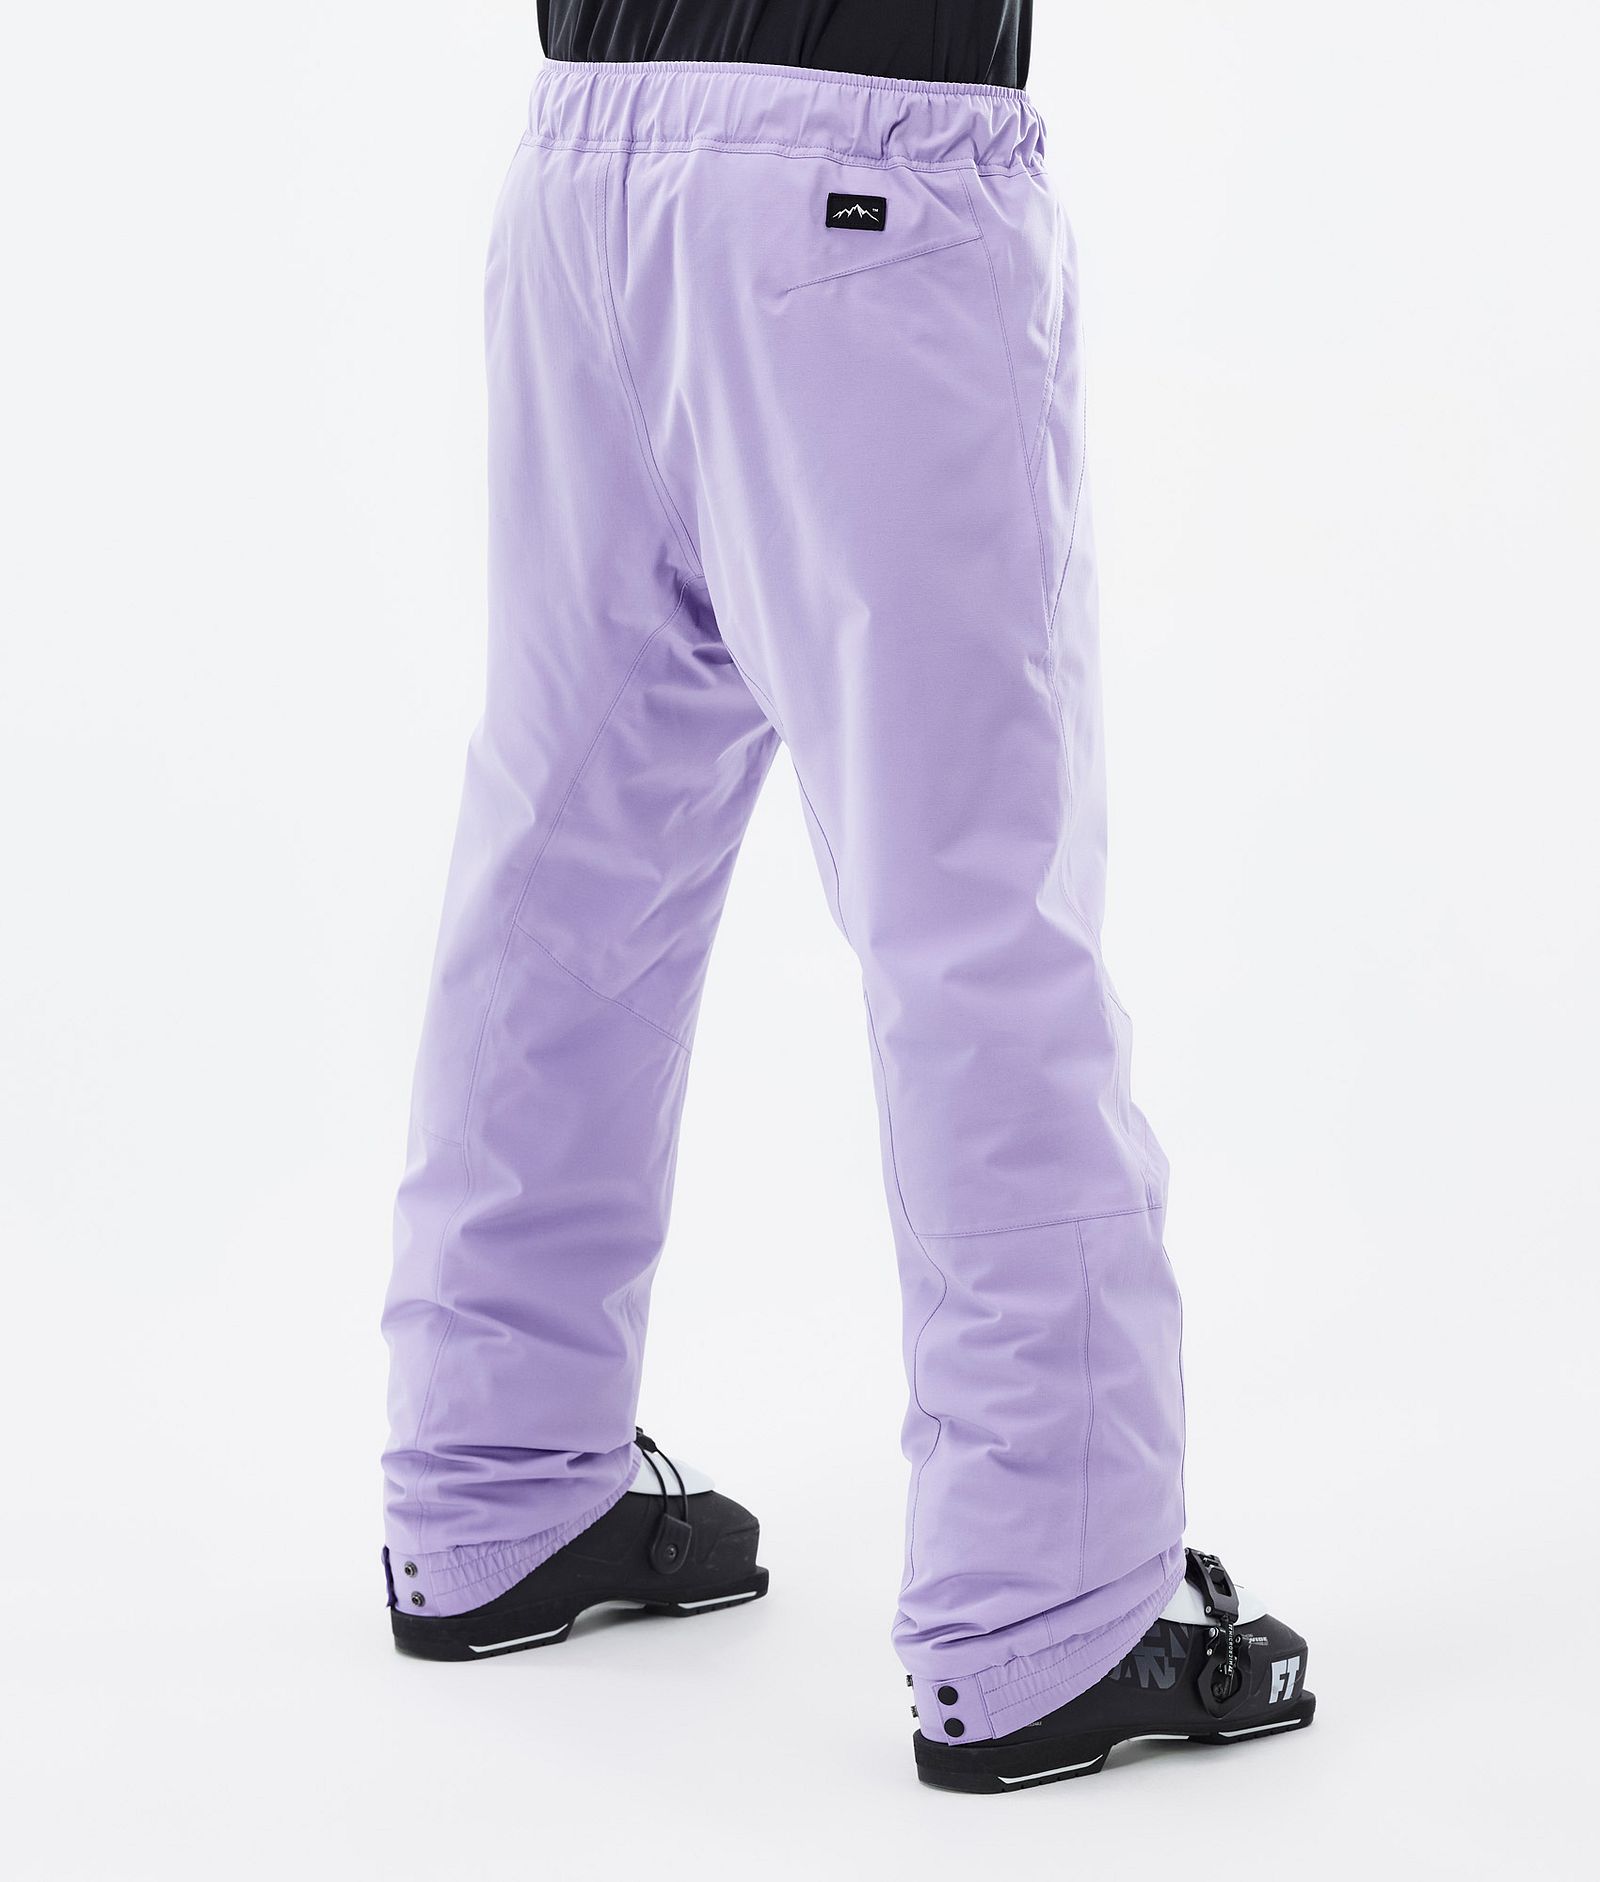 Blizzard 2022 Pantalones Esquí Hombre Faded violet